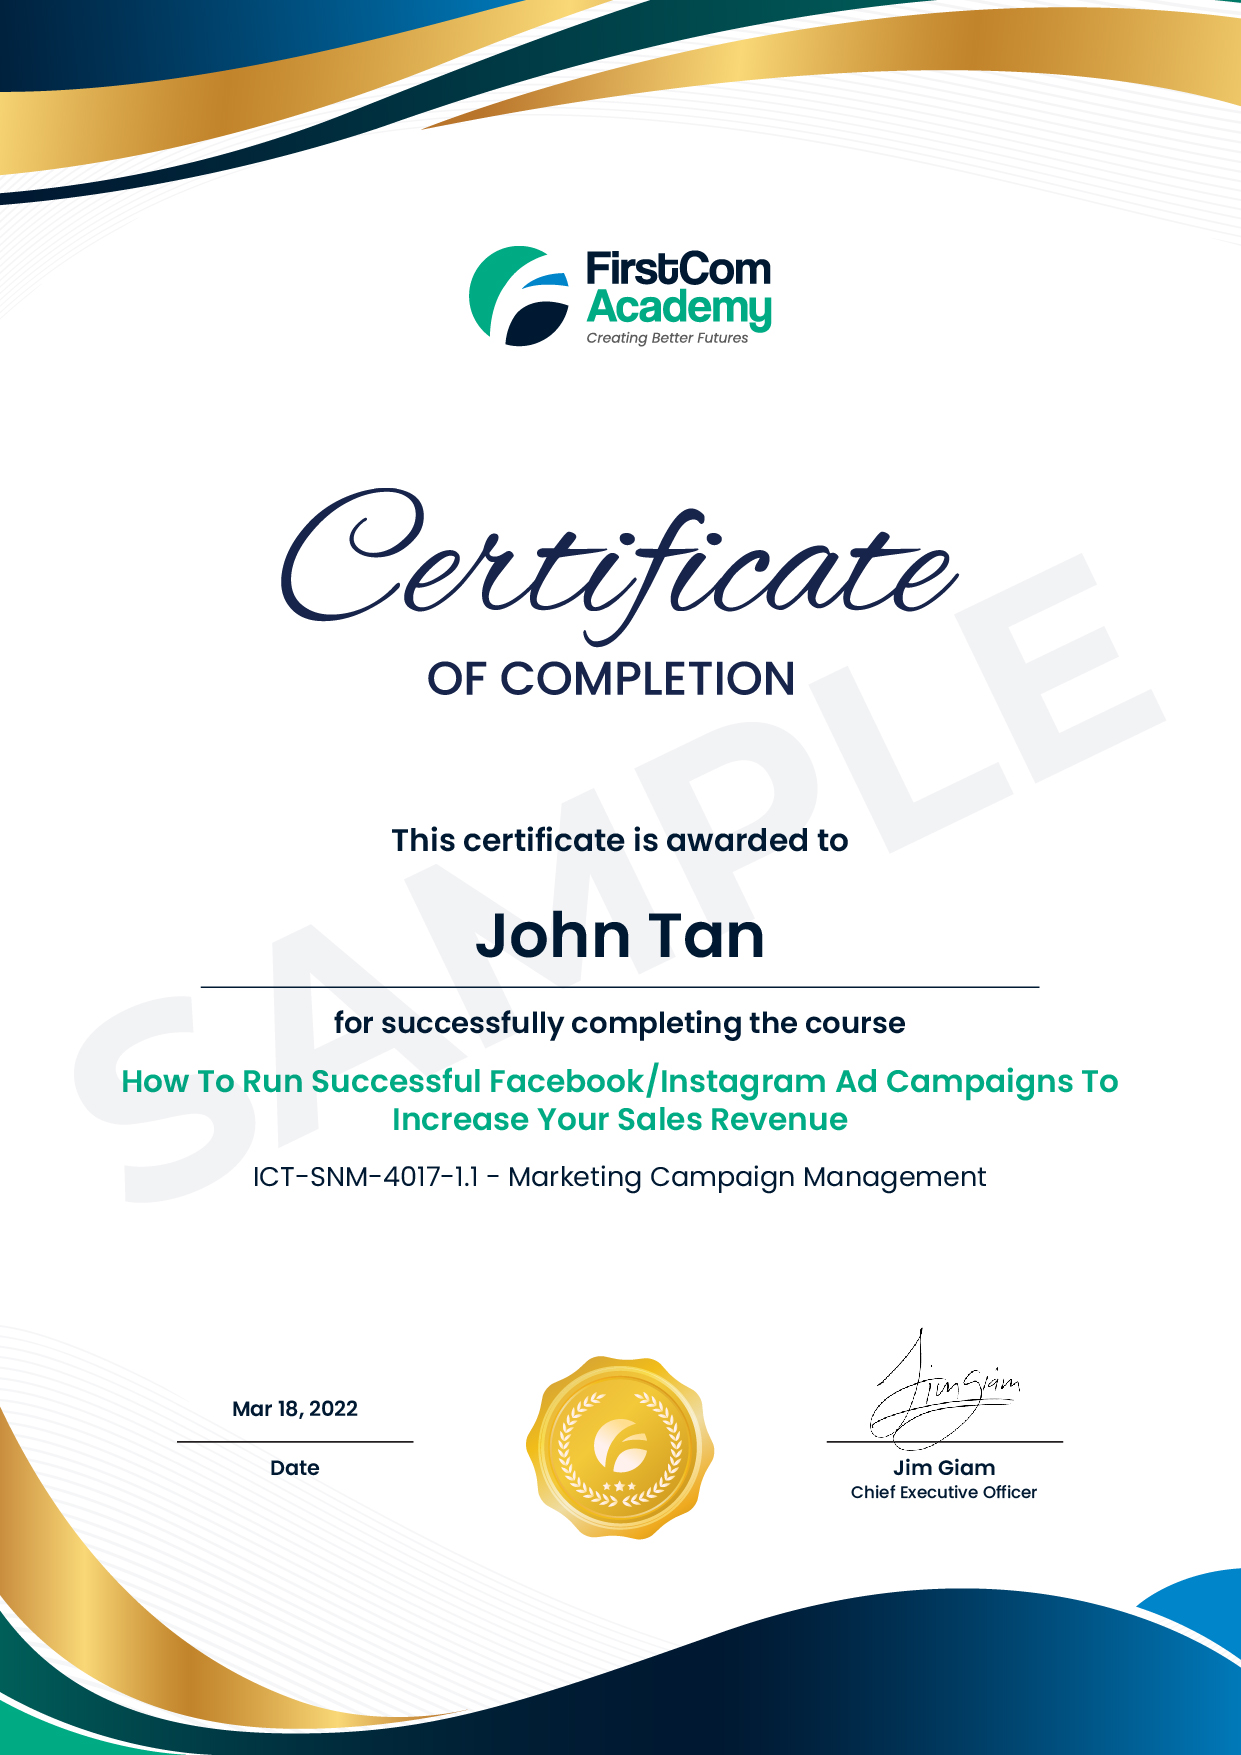 Facebook marketing course certificate by FirstCom Academy Singapore